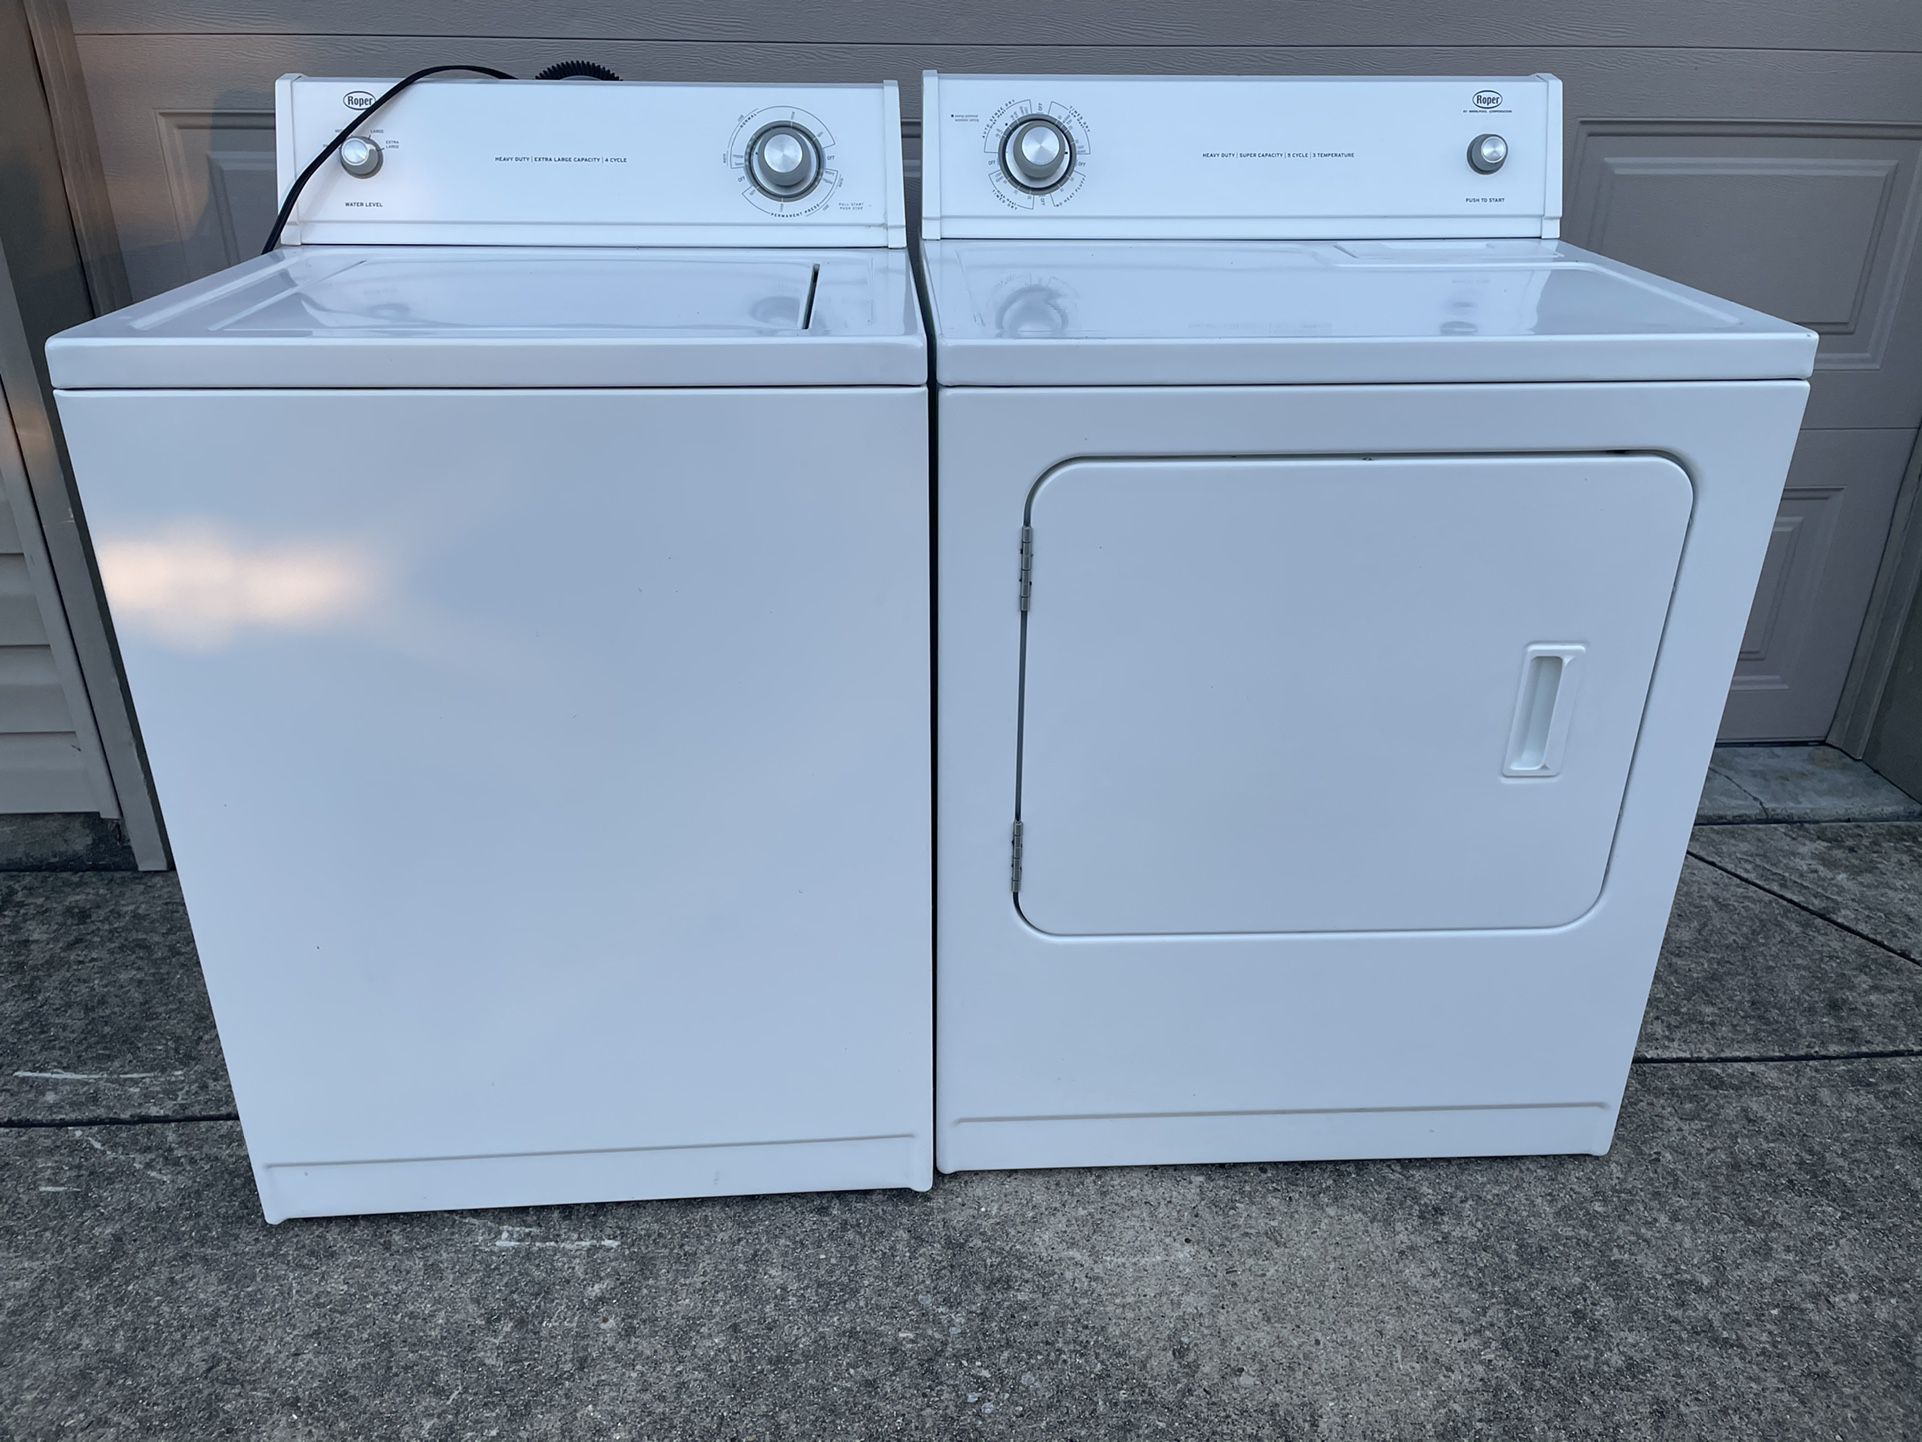 Roper White Washer - Dryer Set